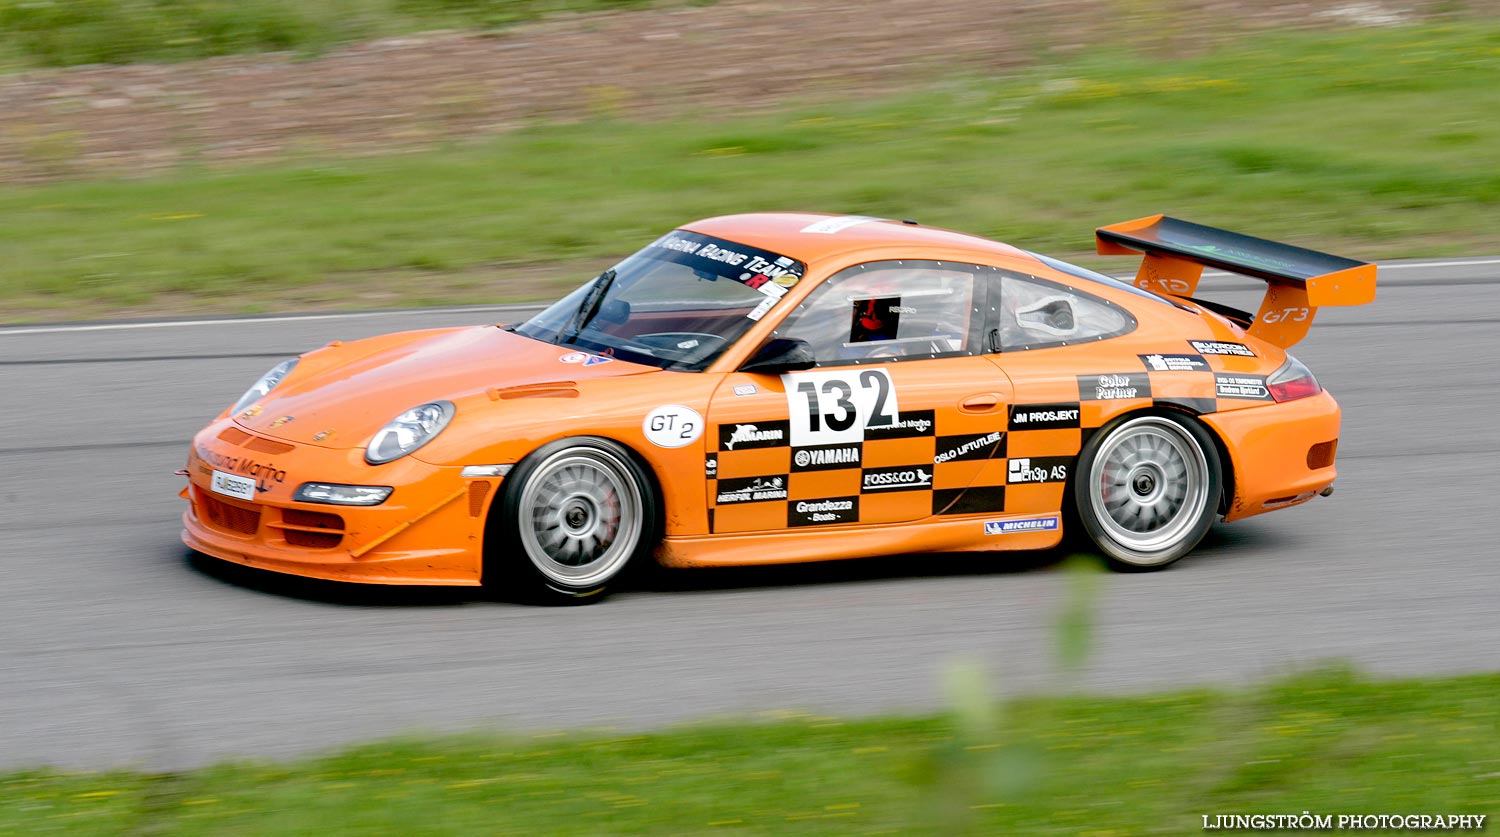 SSK Raceweek,mix,Kinnekulle Ring,Götene,Sverige,Motorsport,,2009,107520